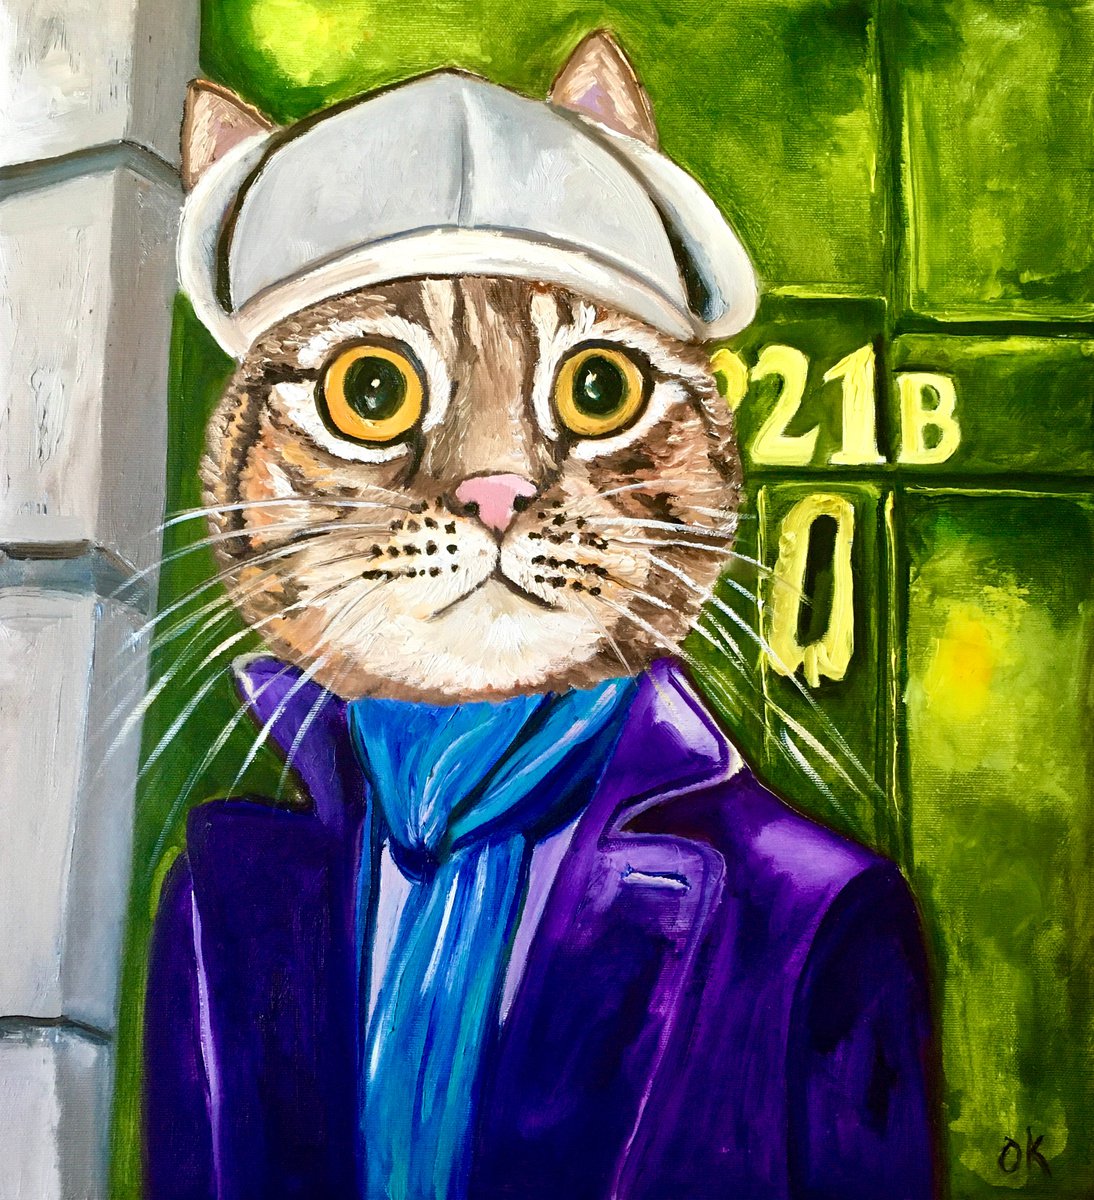 Troy The Cat- Sherlock Holmes Baker Street 221 B oil painting for cat lovers. by Olga Koval